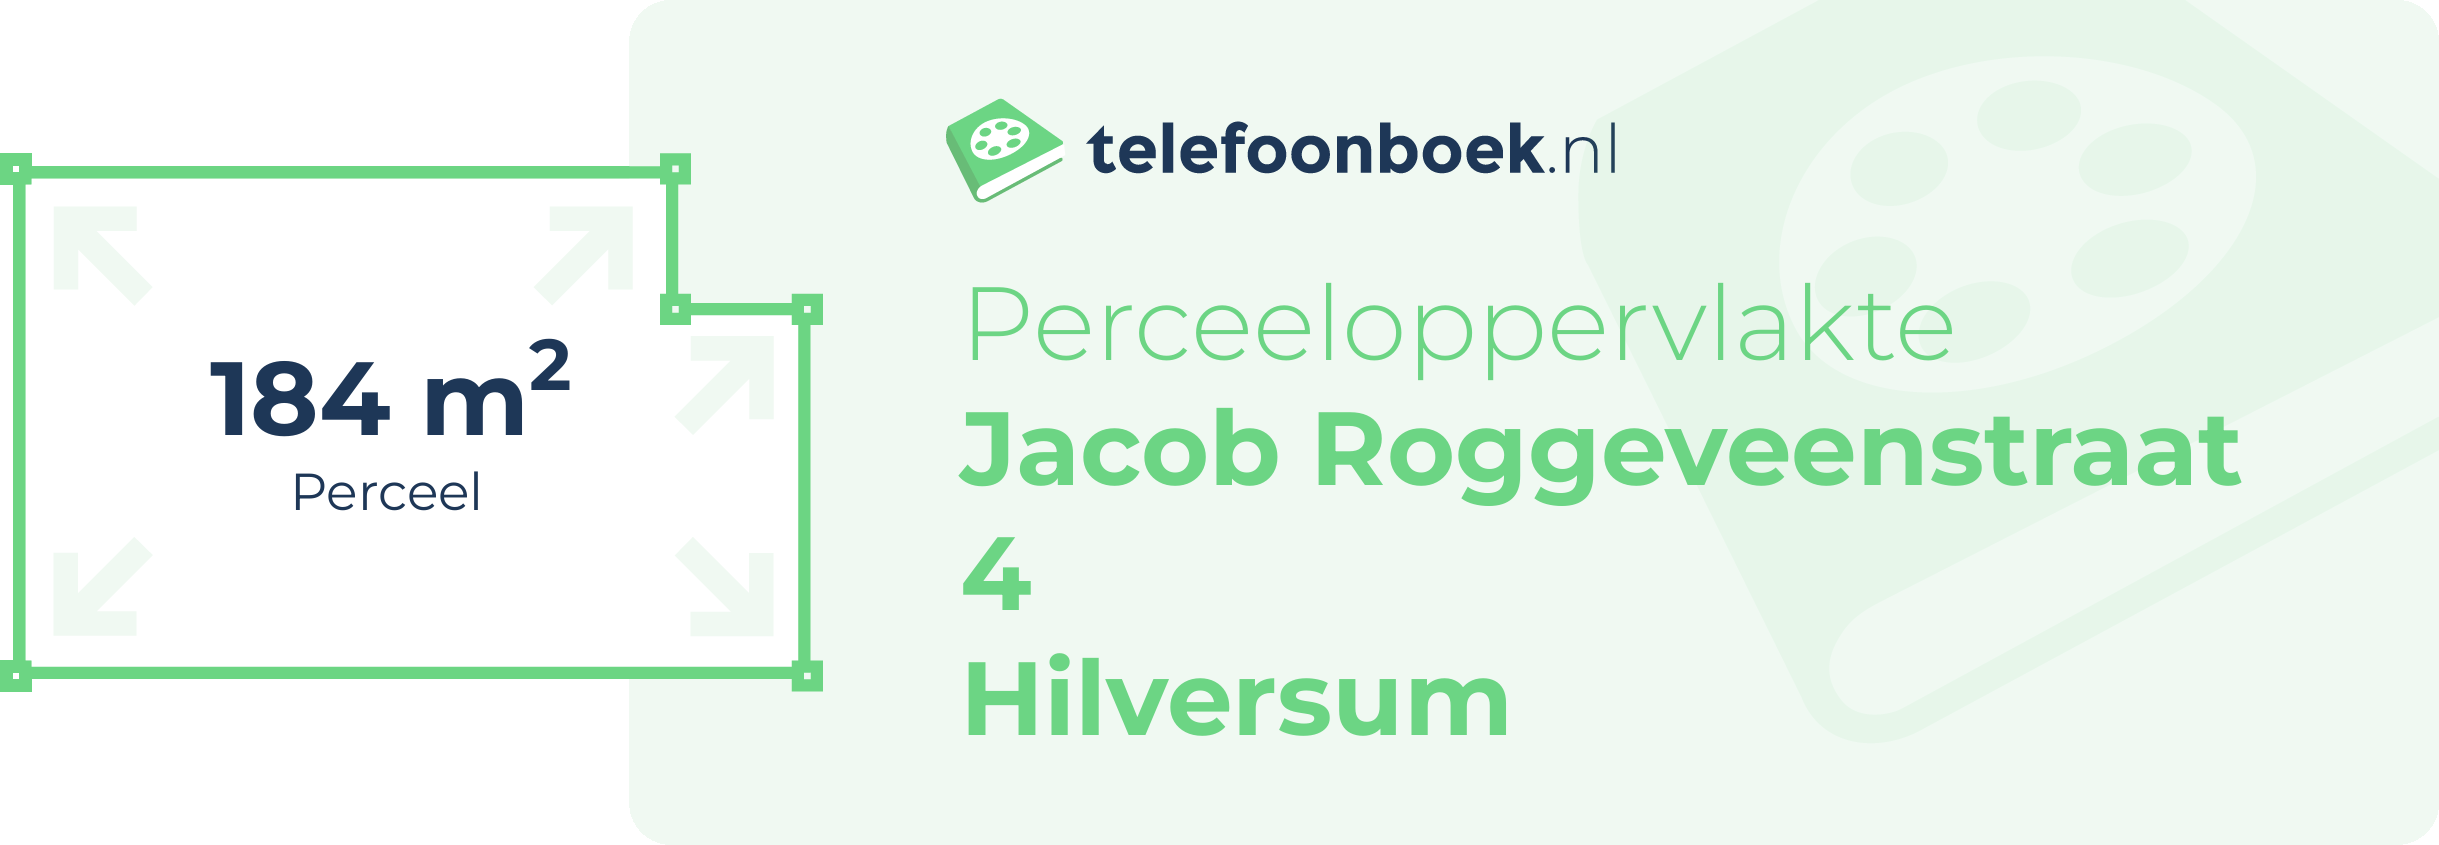 Perceeloppervlakte Jacob Roggeveenstraat 4 Hilversum